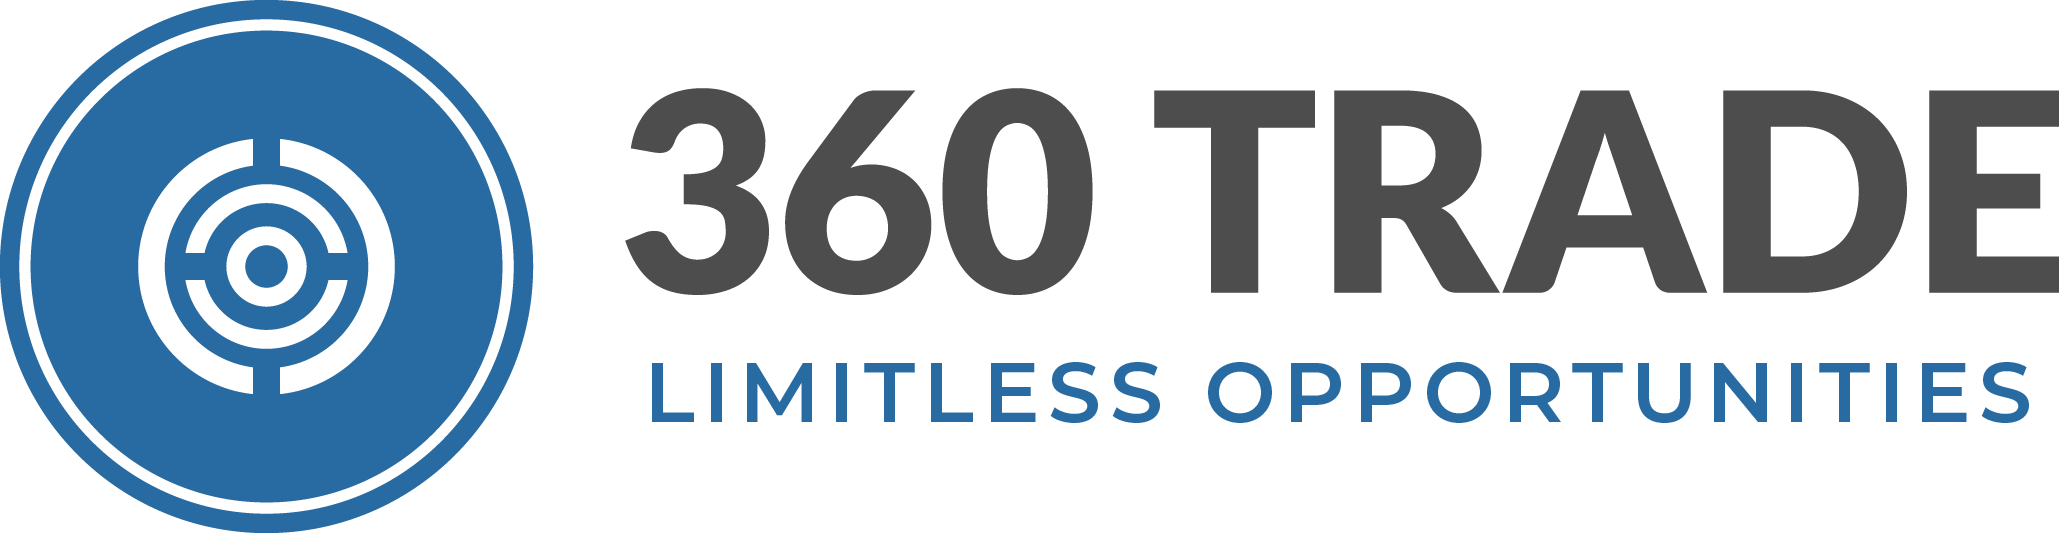 360 Trade